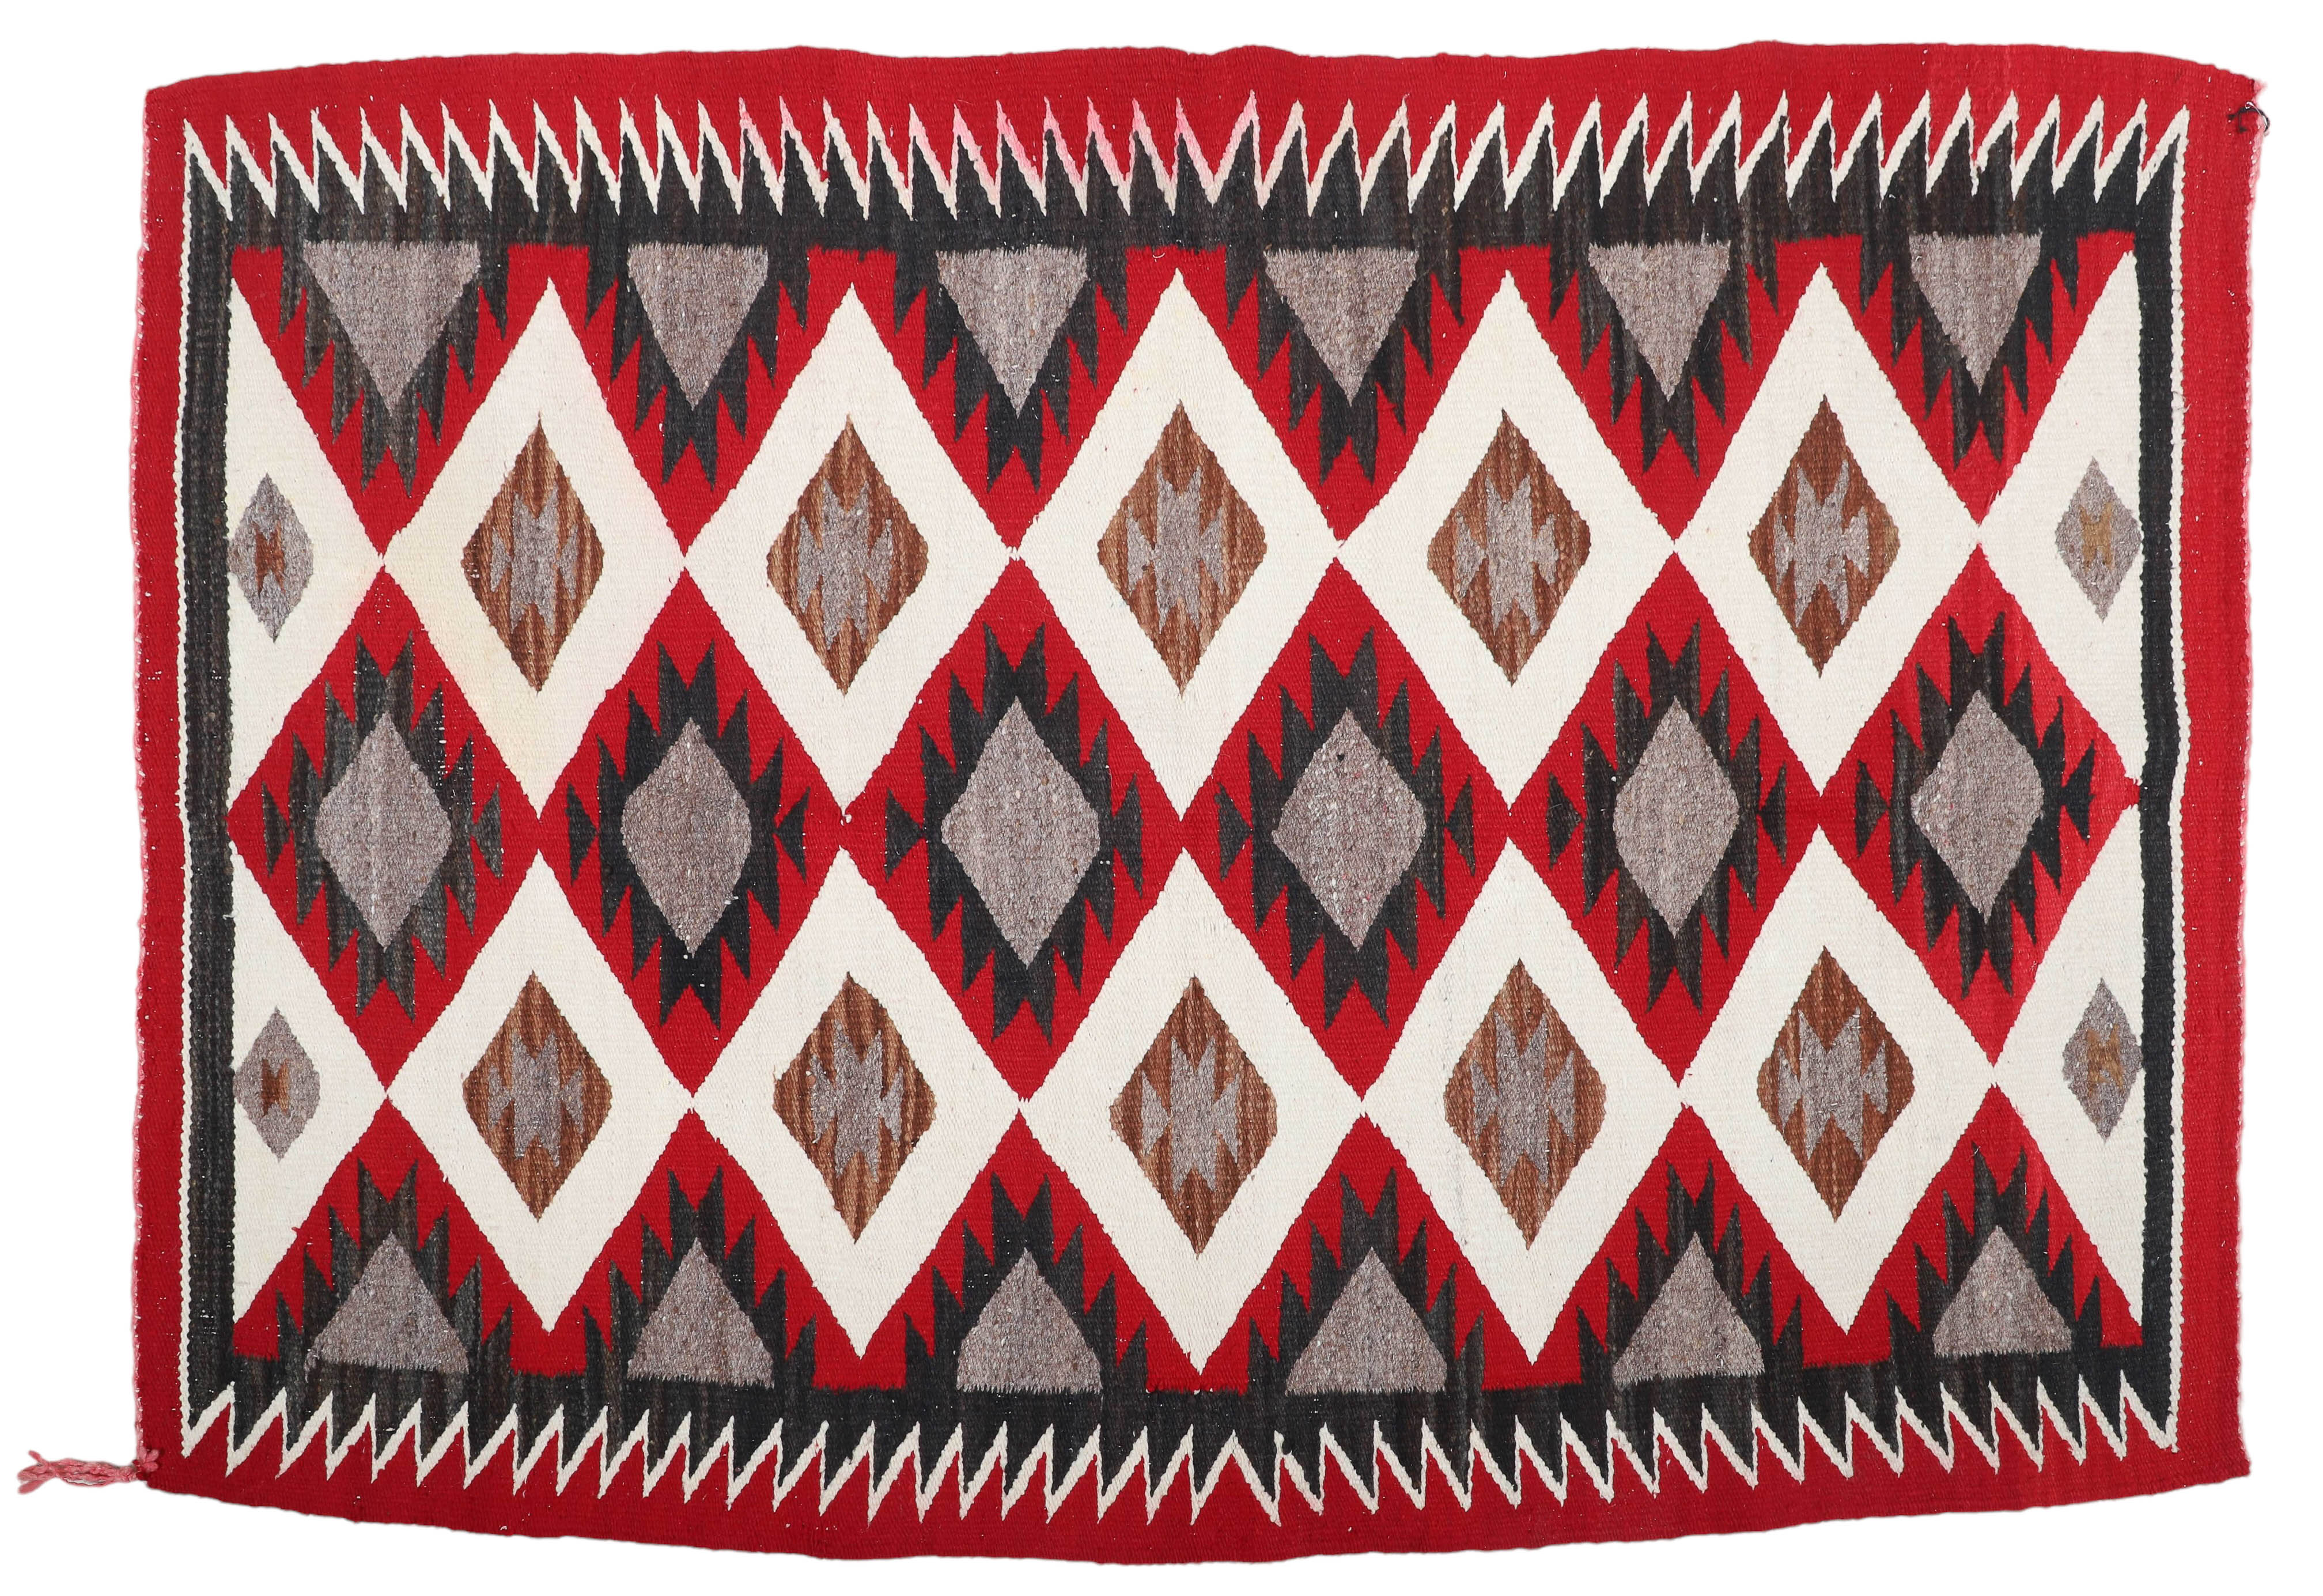 Navajo Eye Dazzler weaving early 2e1b63